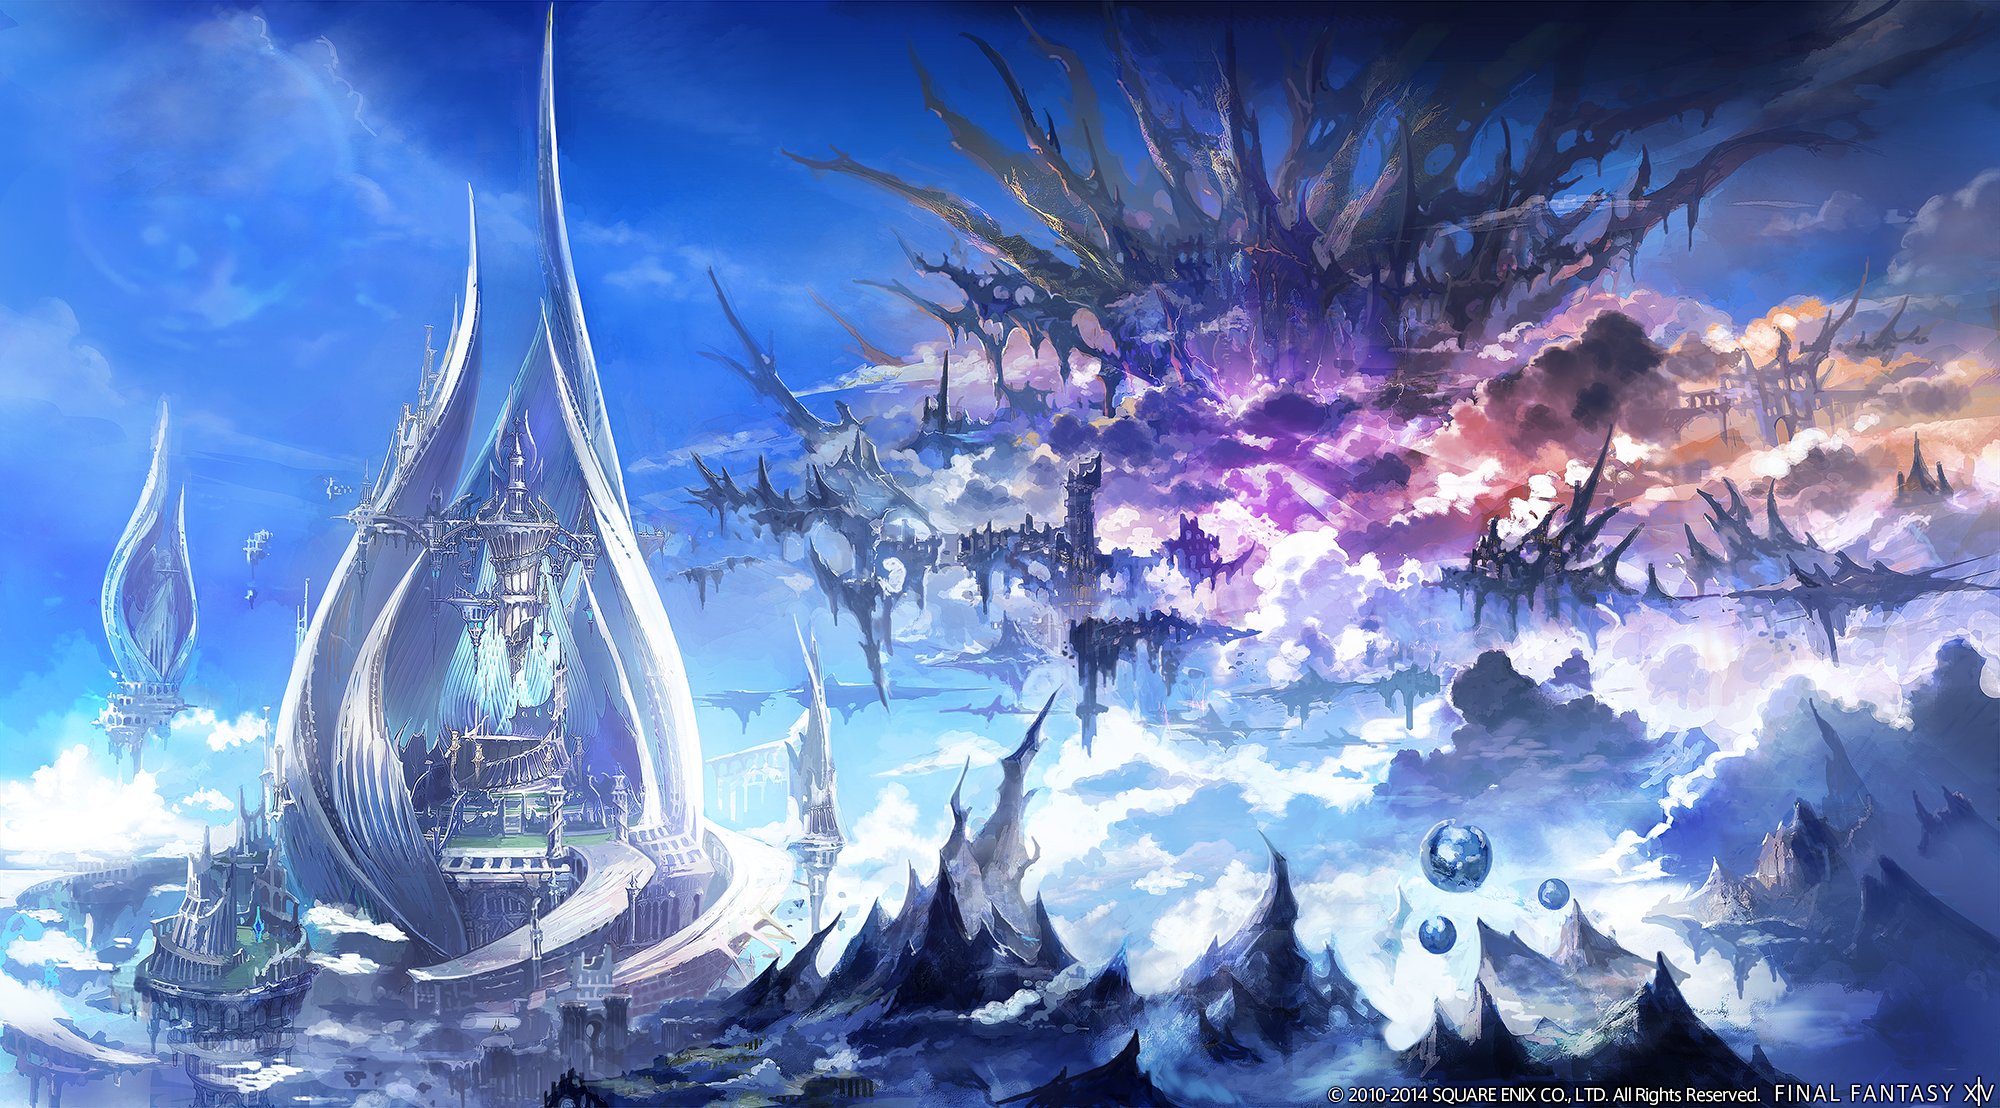 Final Fantasy XIV A Realm Reborn fans at its first European Final